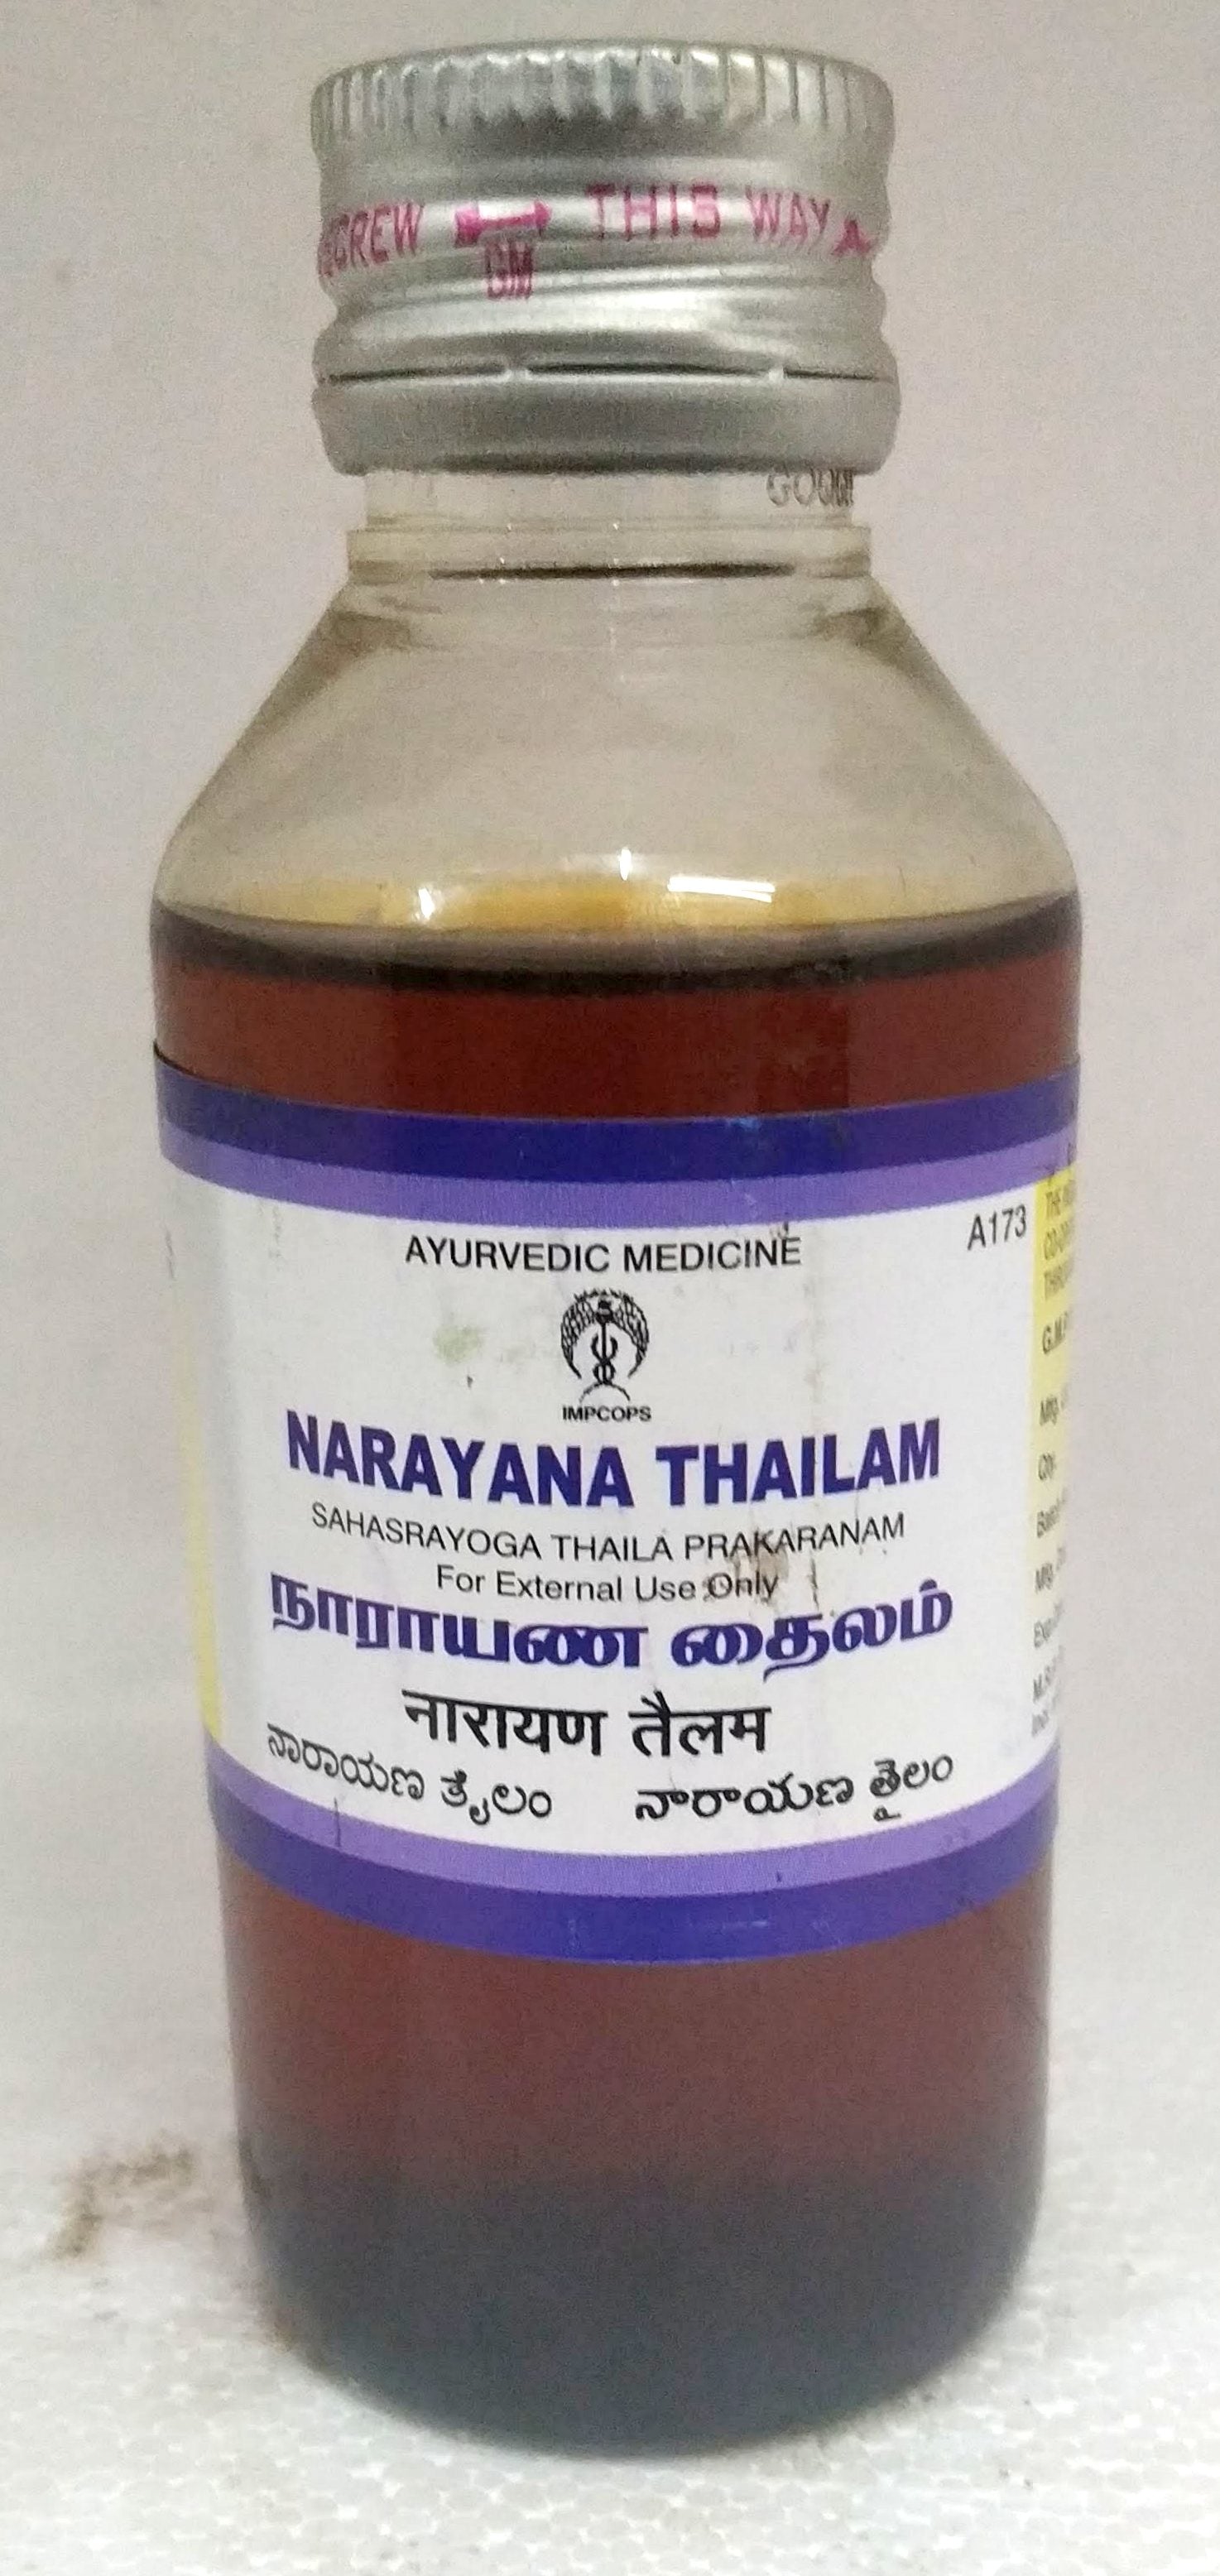 Impcops Narayana Thailam 100ml -  Impcops - Medizzo.com